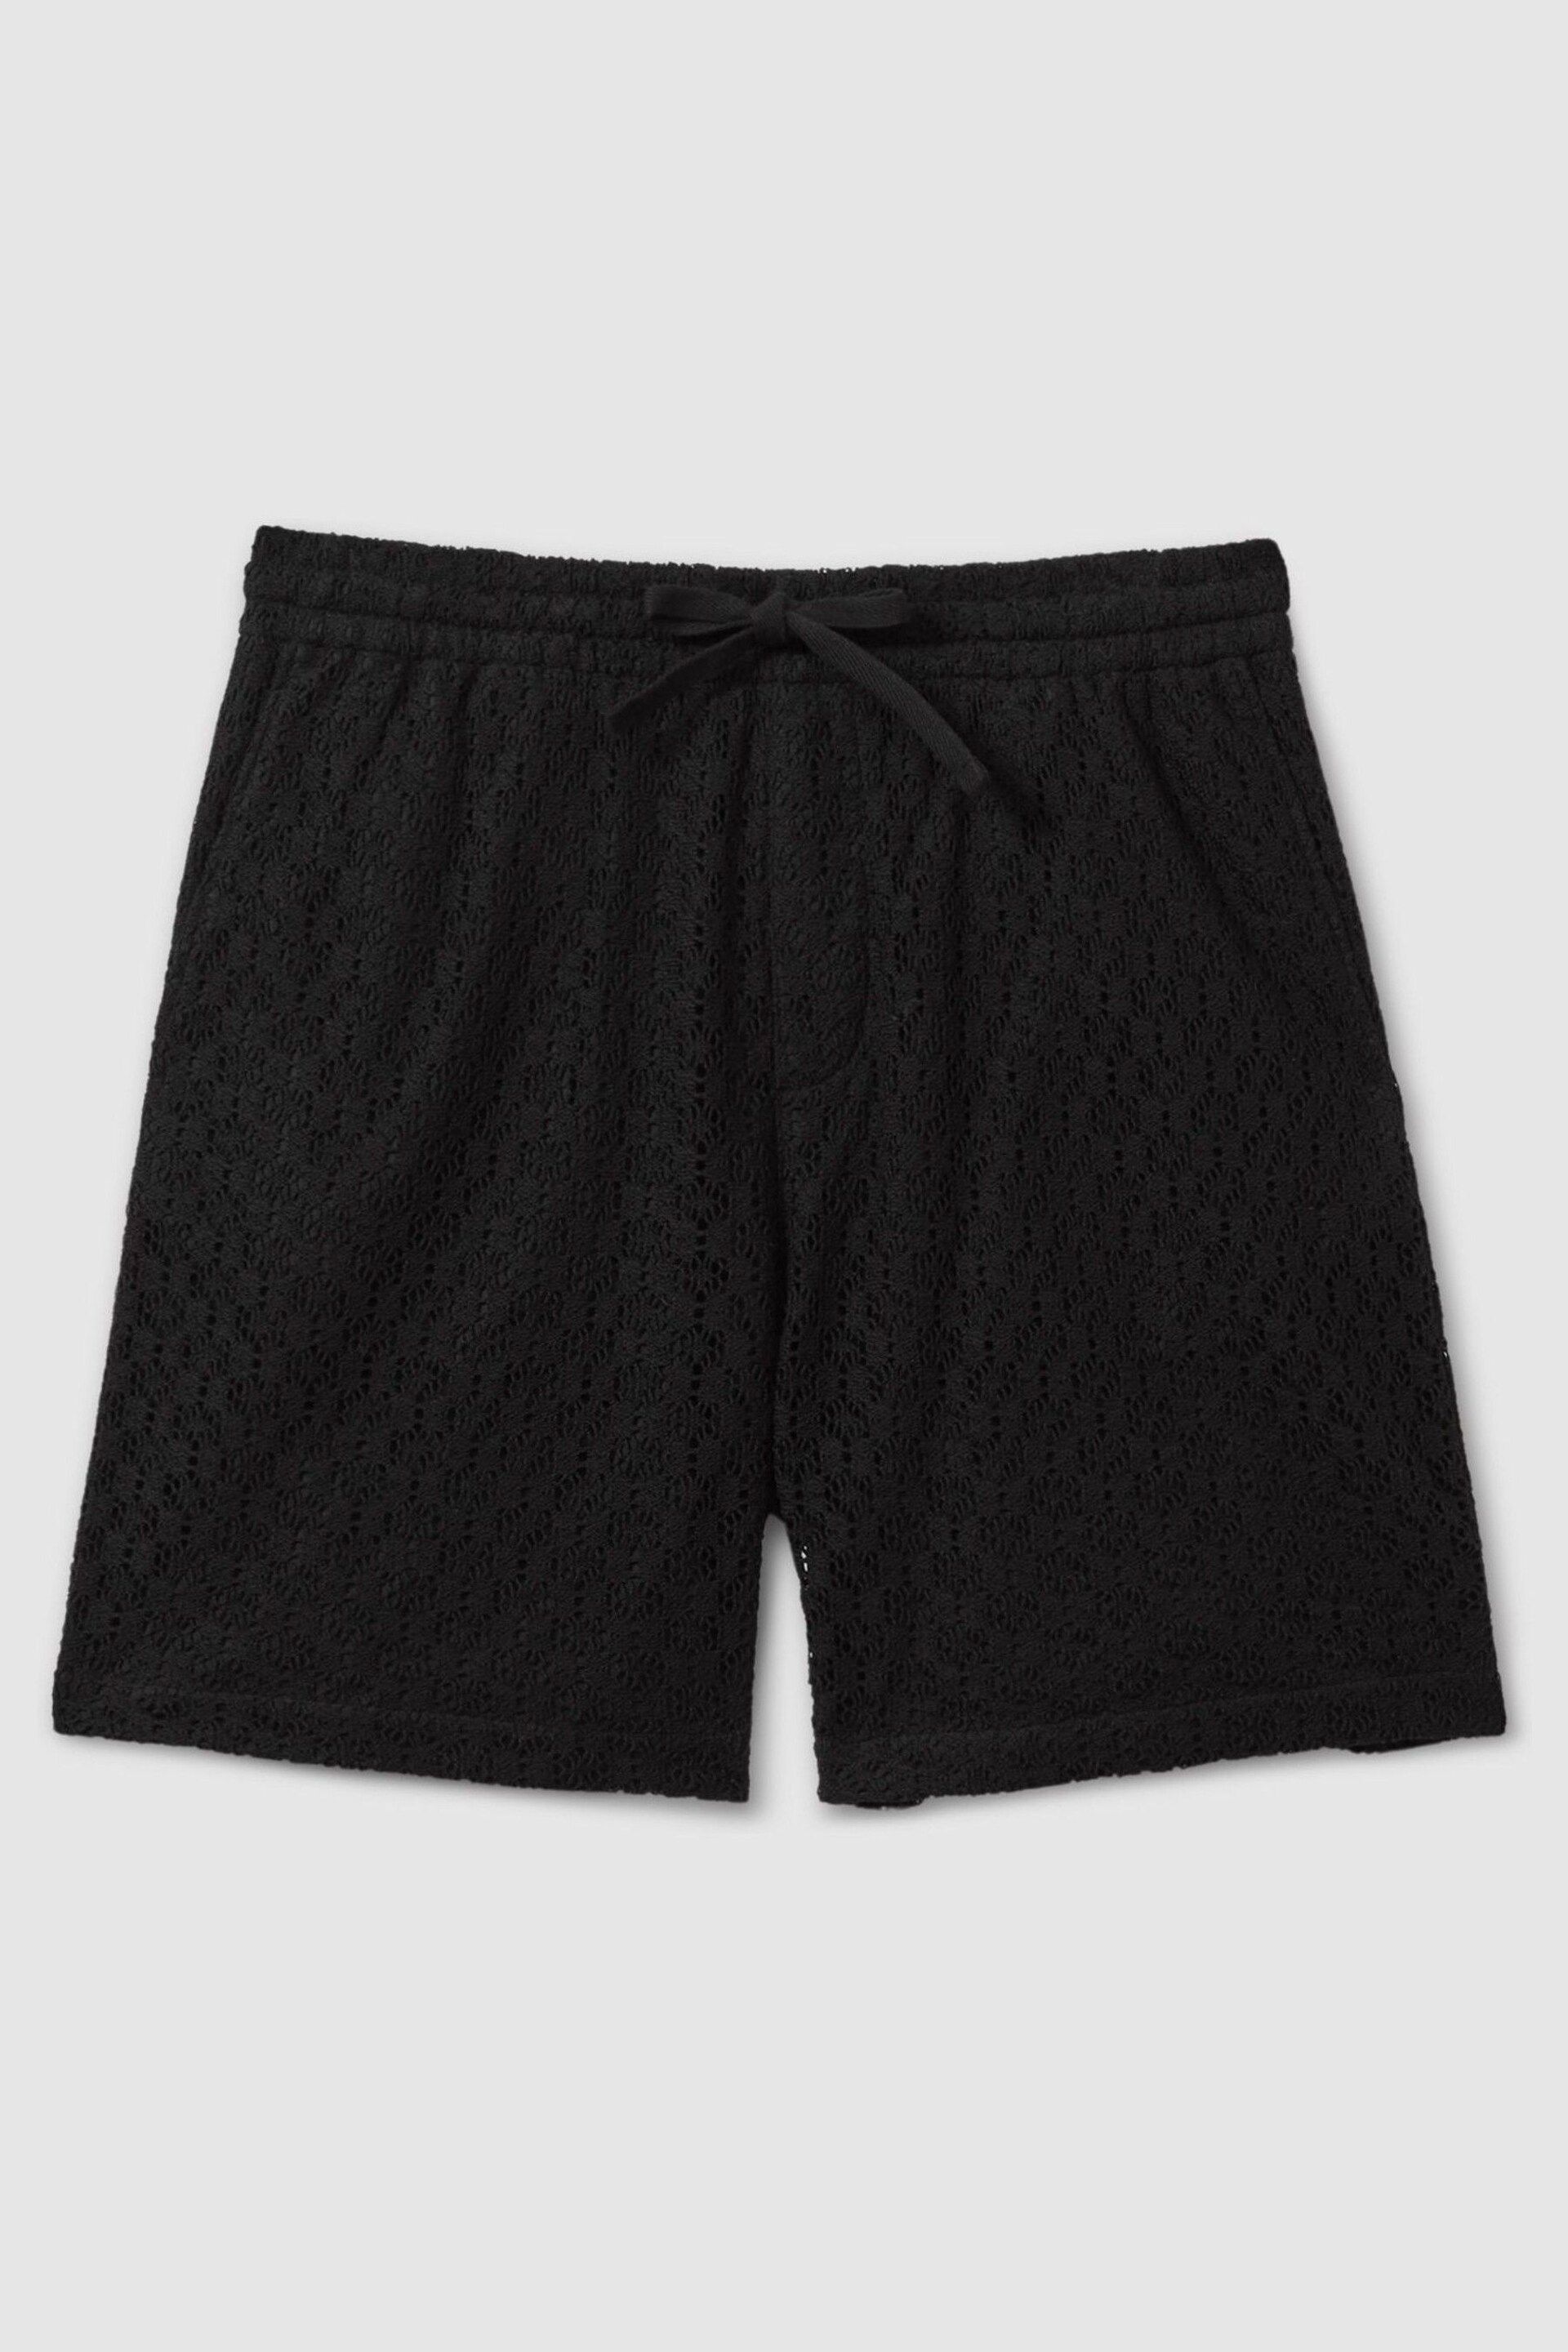 Reiss Black Prez Cotton Blend Crochet Drawstring Shorts - Image 2 of 6